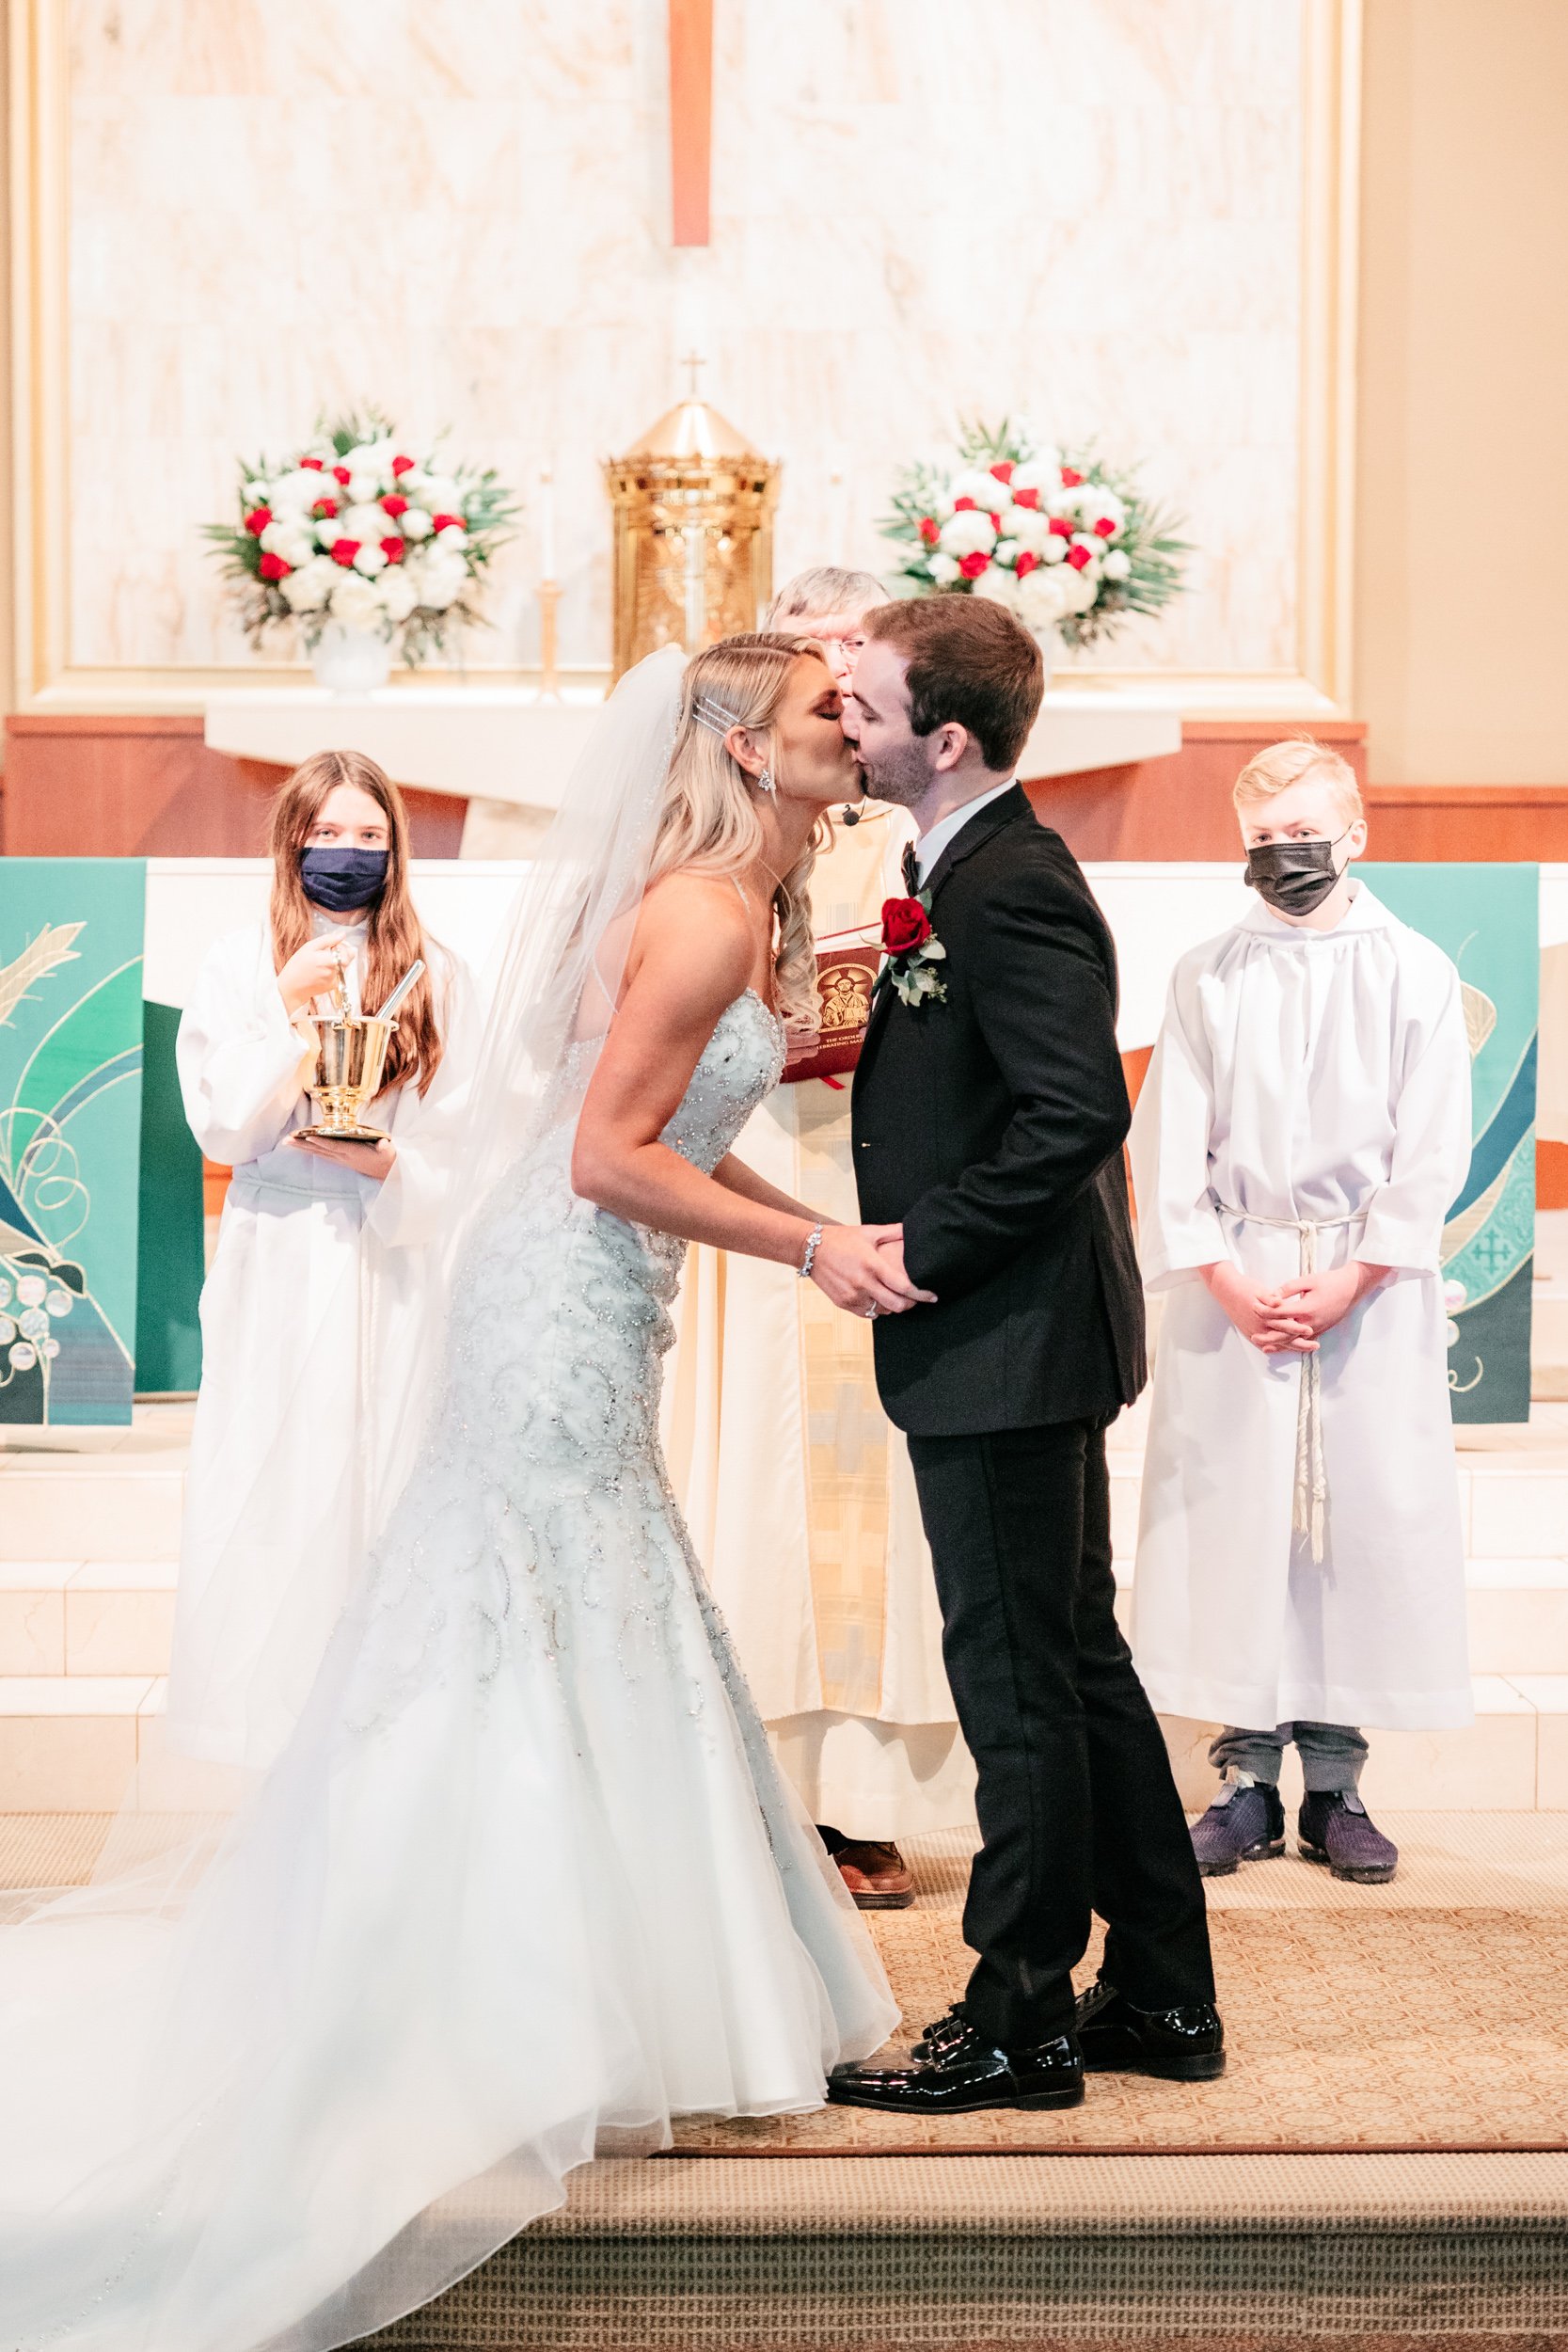 LUCEINS MANOR WEDDING PHOTOGRAPHY - FEB 2021 - 51.jpg